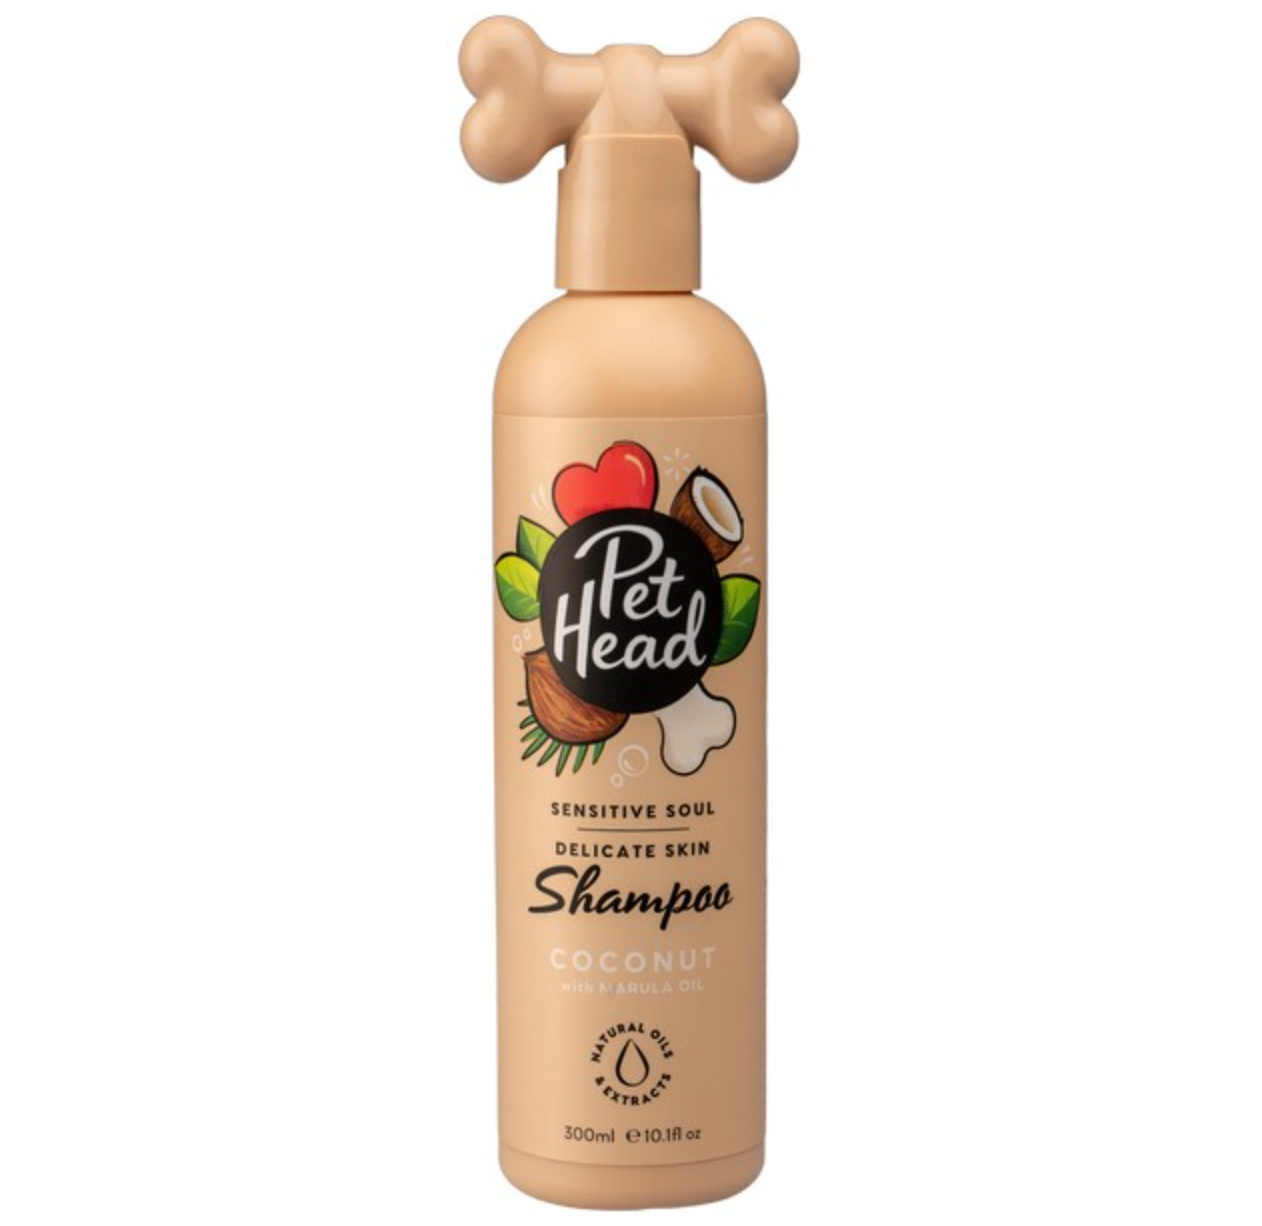 Pet Head Sensitive Skin Coconut Shampoo (300ml)